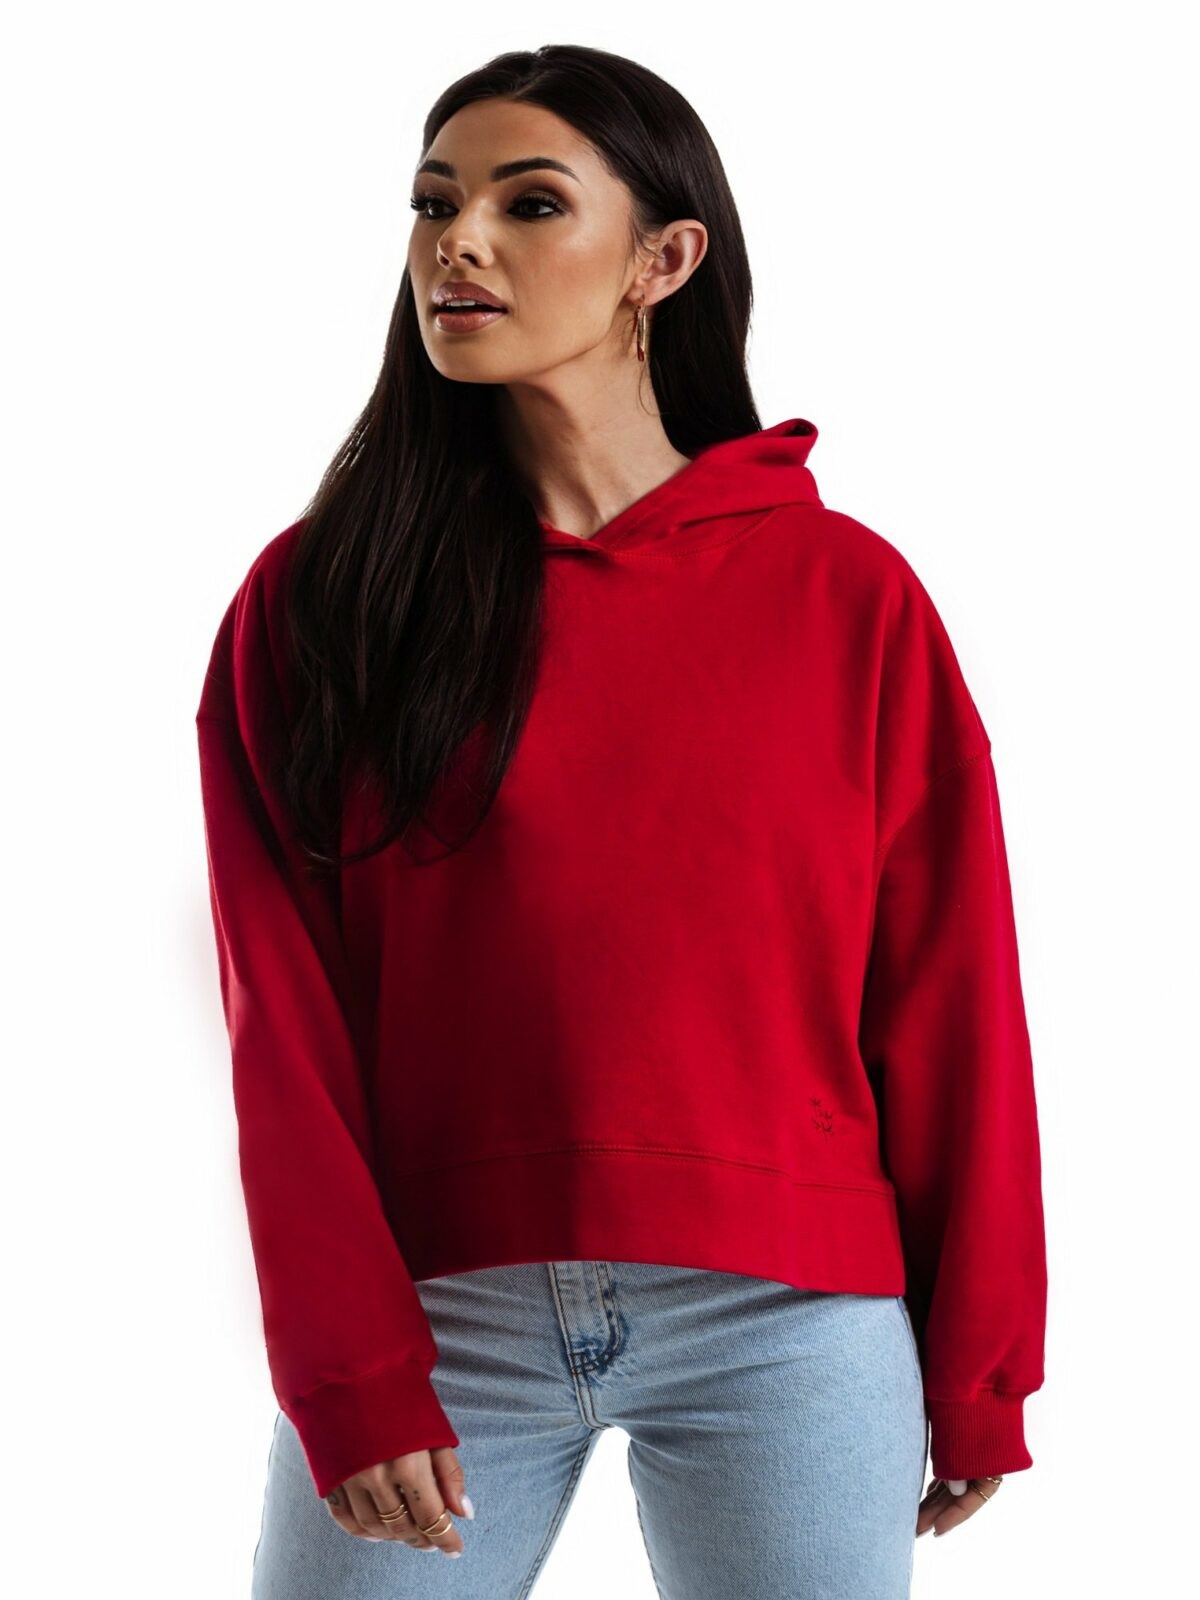 Sweatshirt red Mayflies